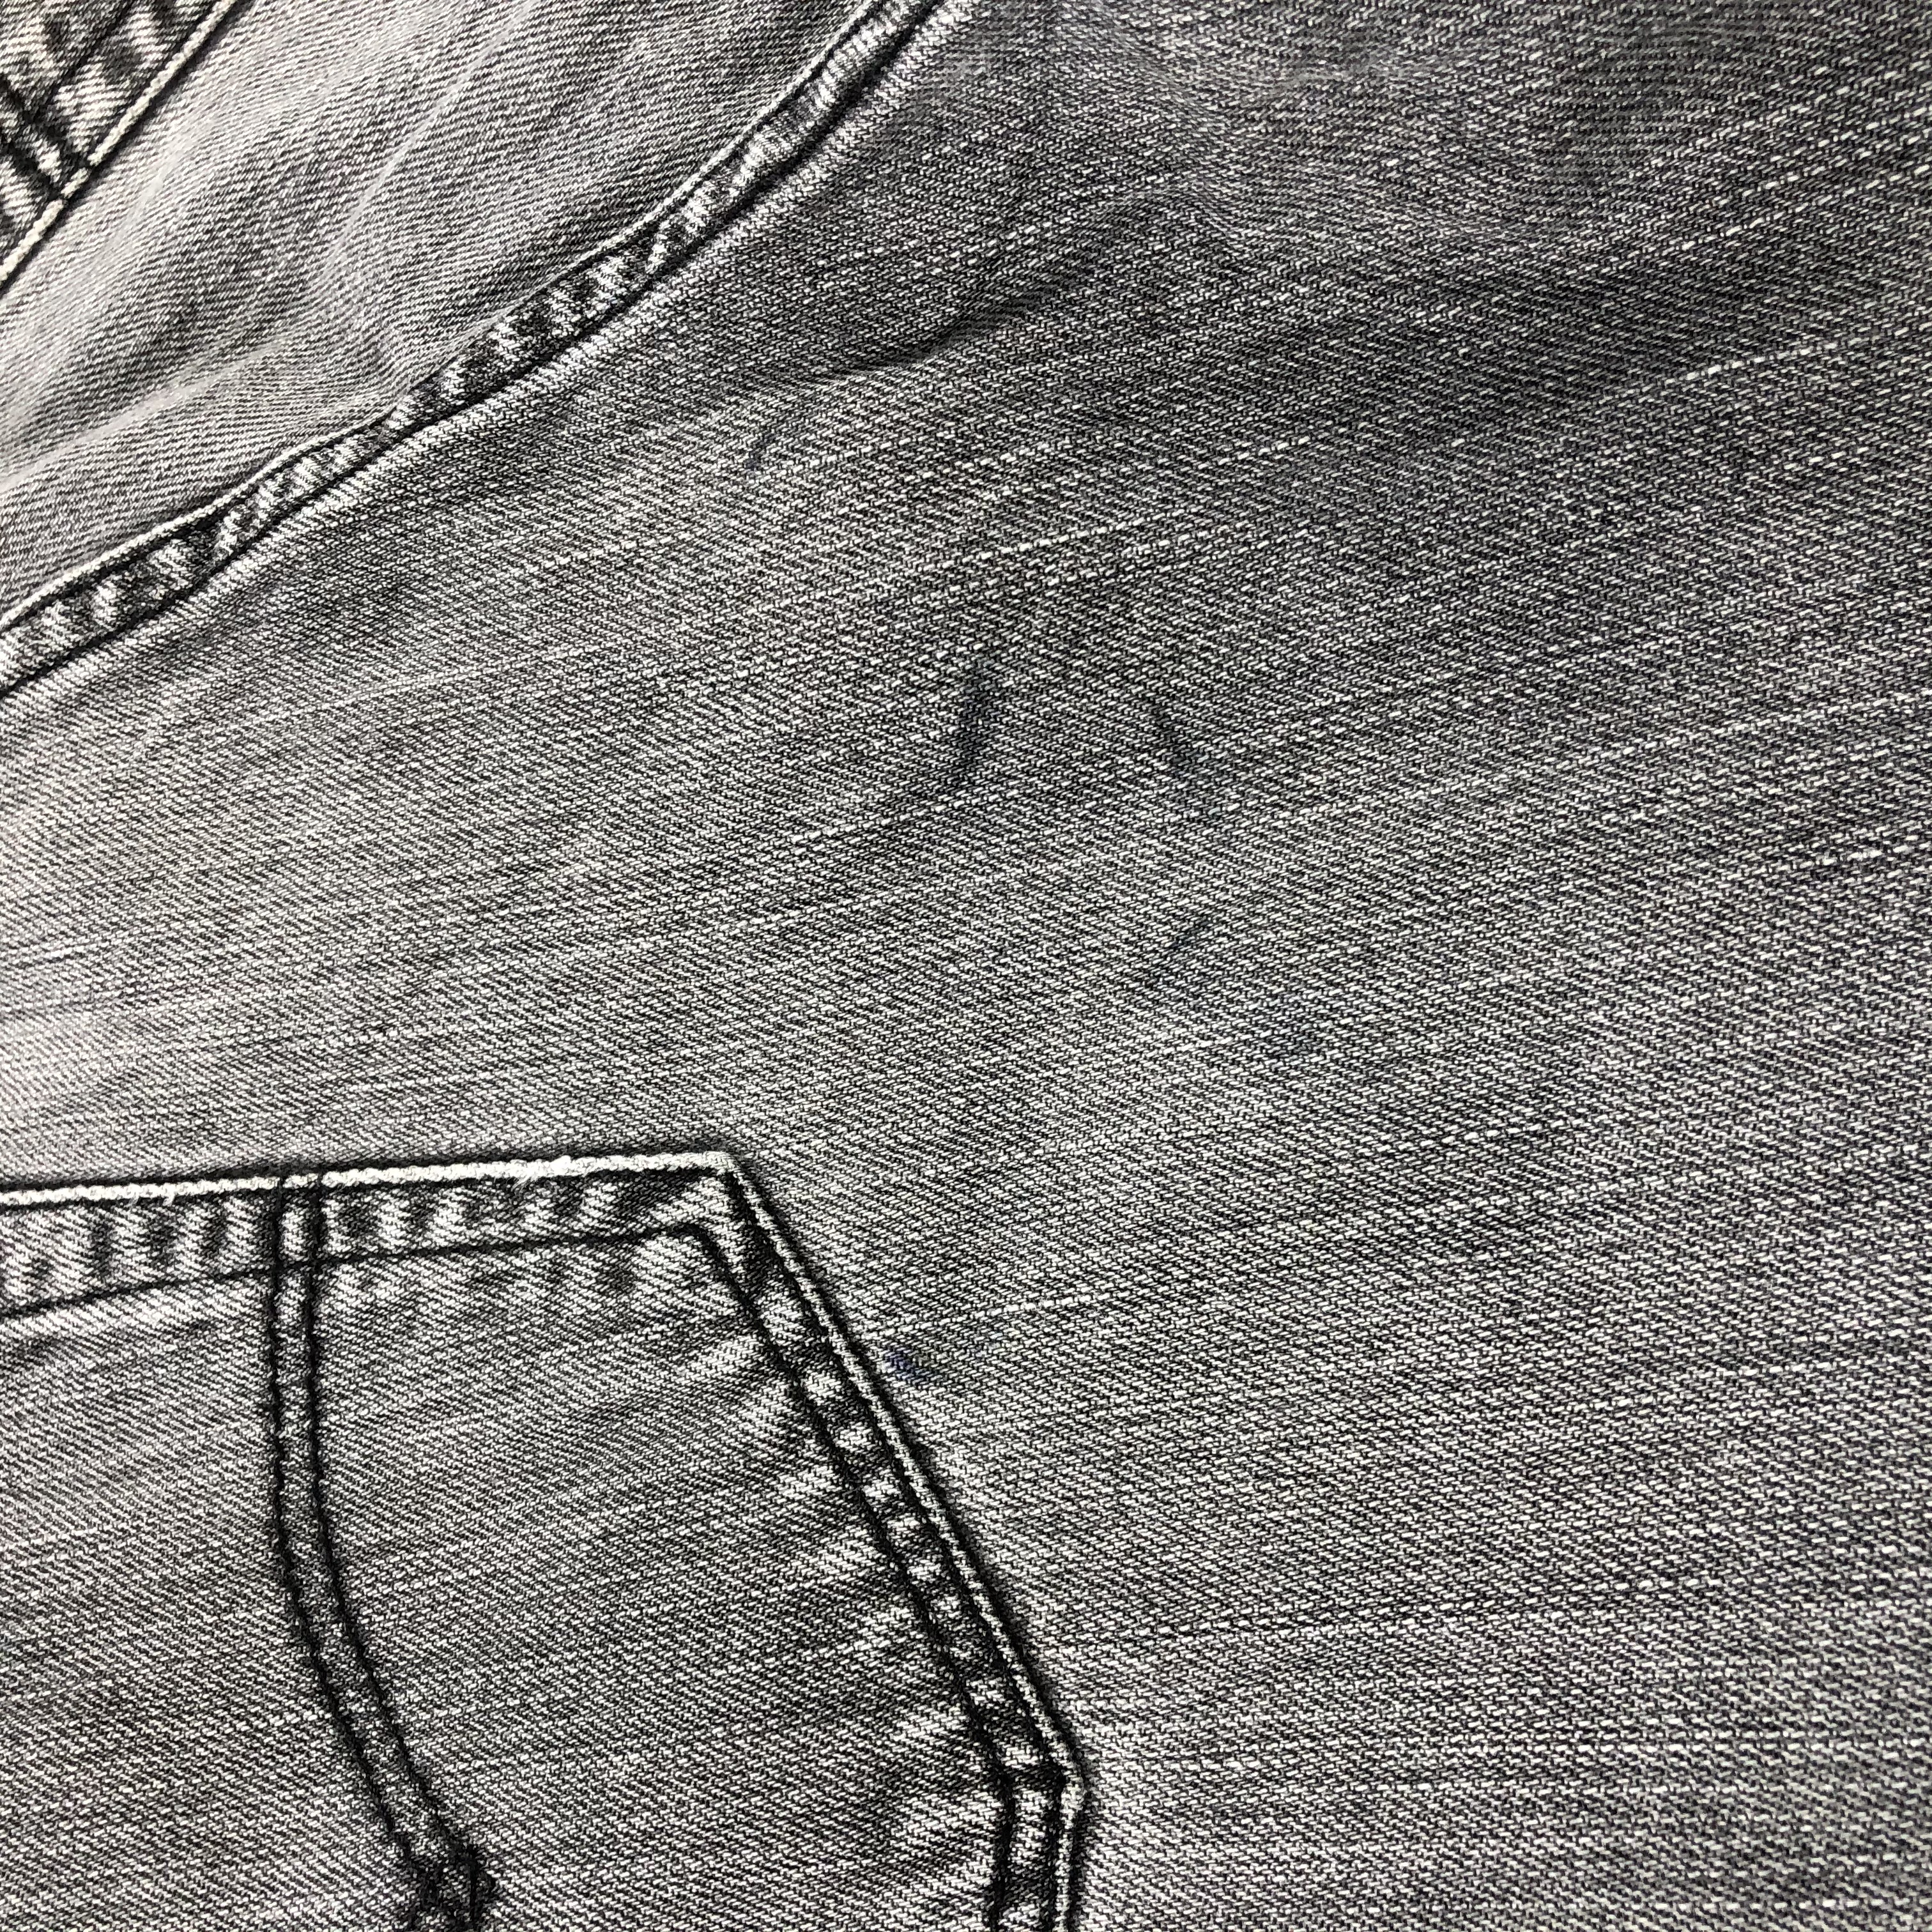 Vintage - Vintage Levi's 501 Jeans Faded Gray Denim KJ794 - 16